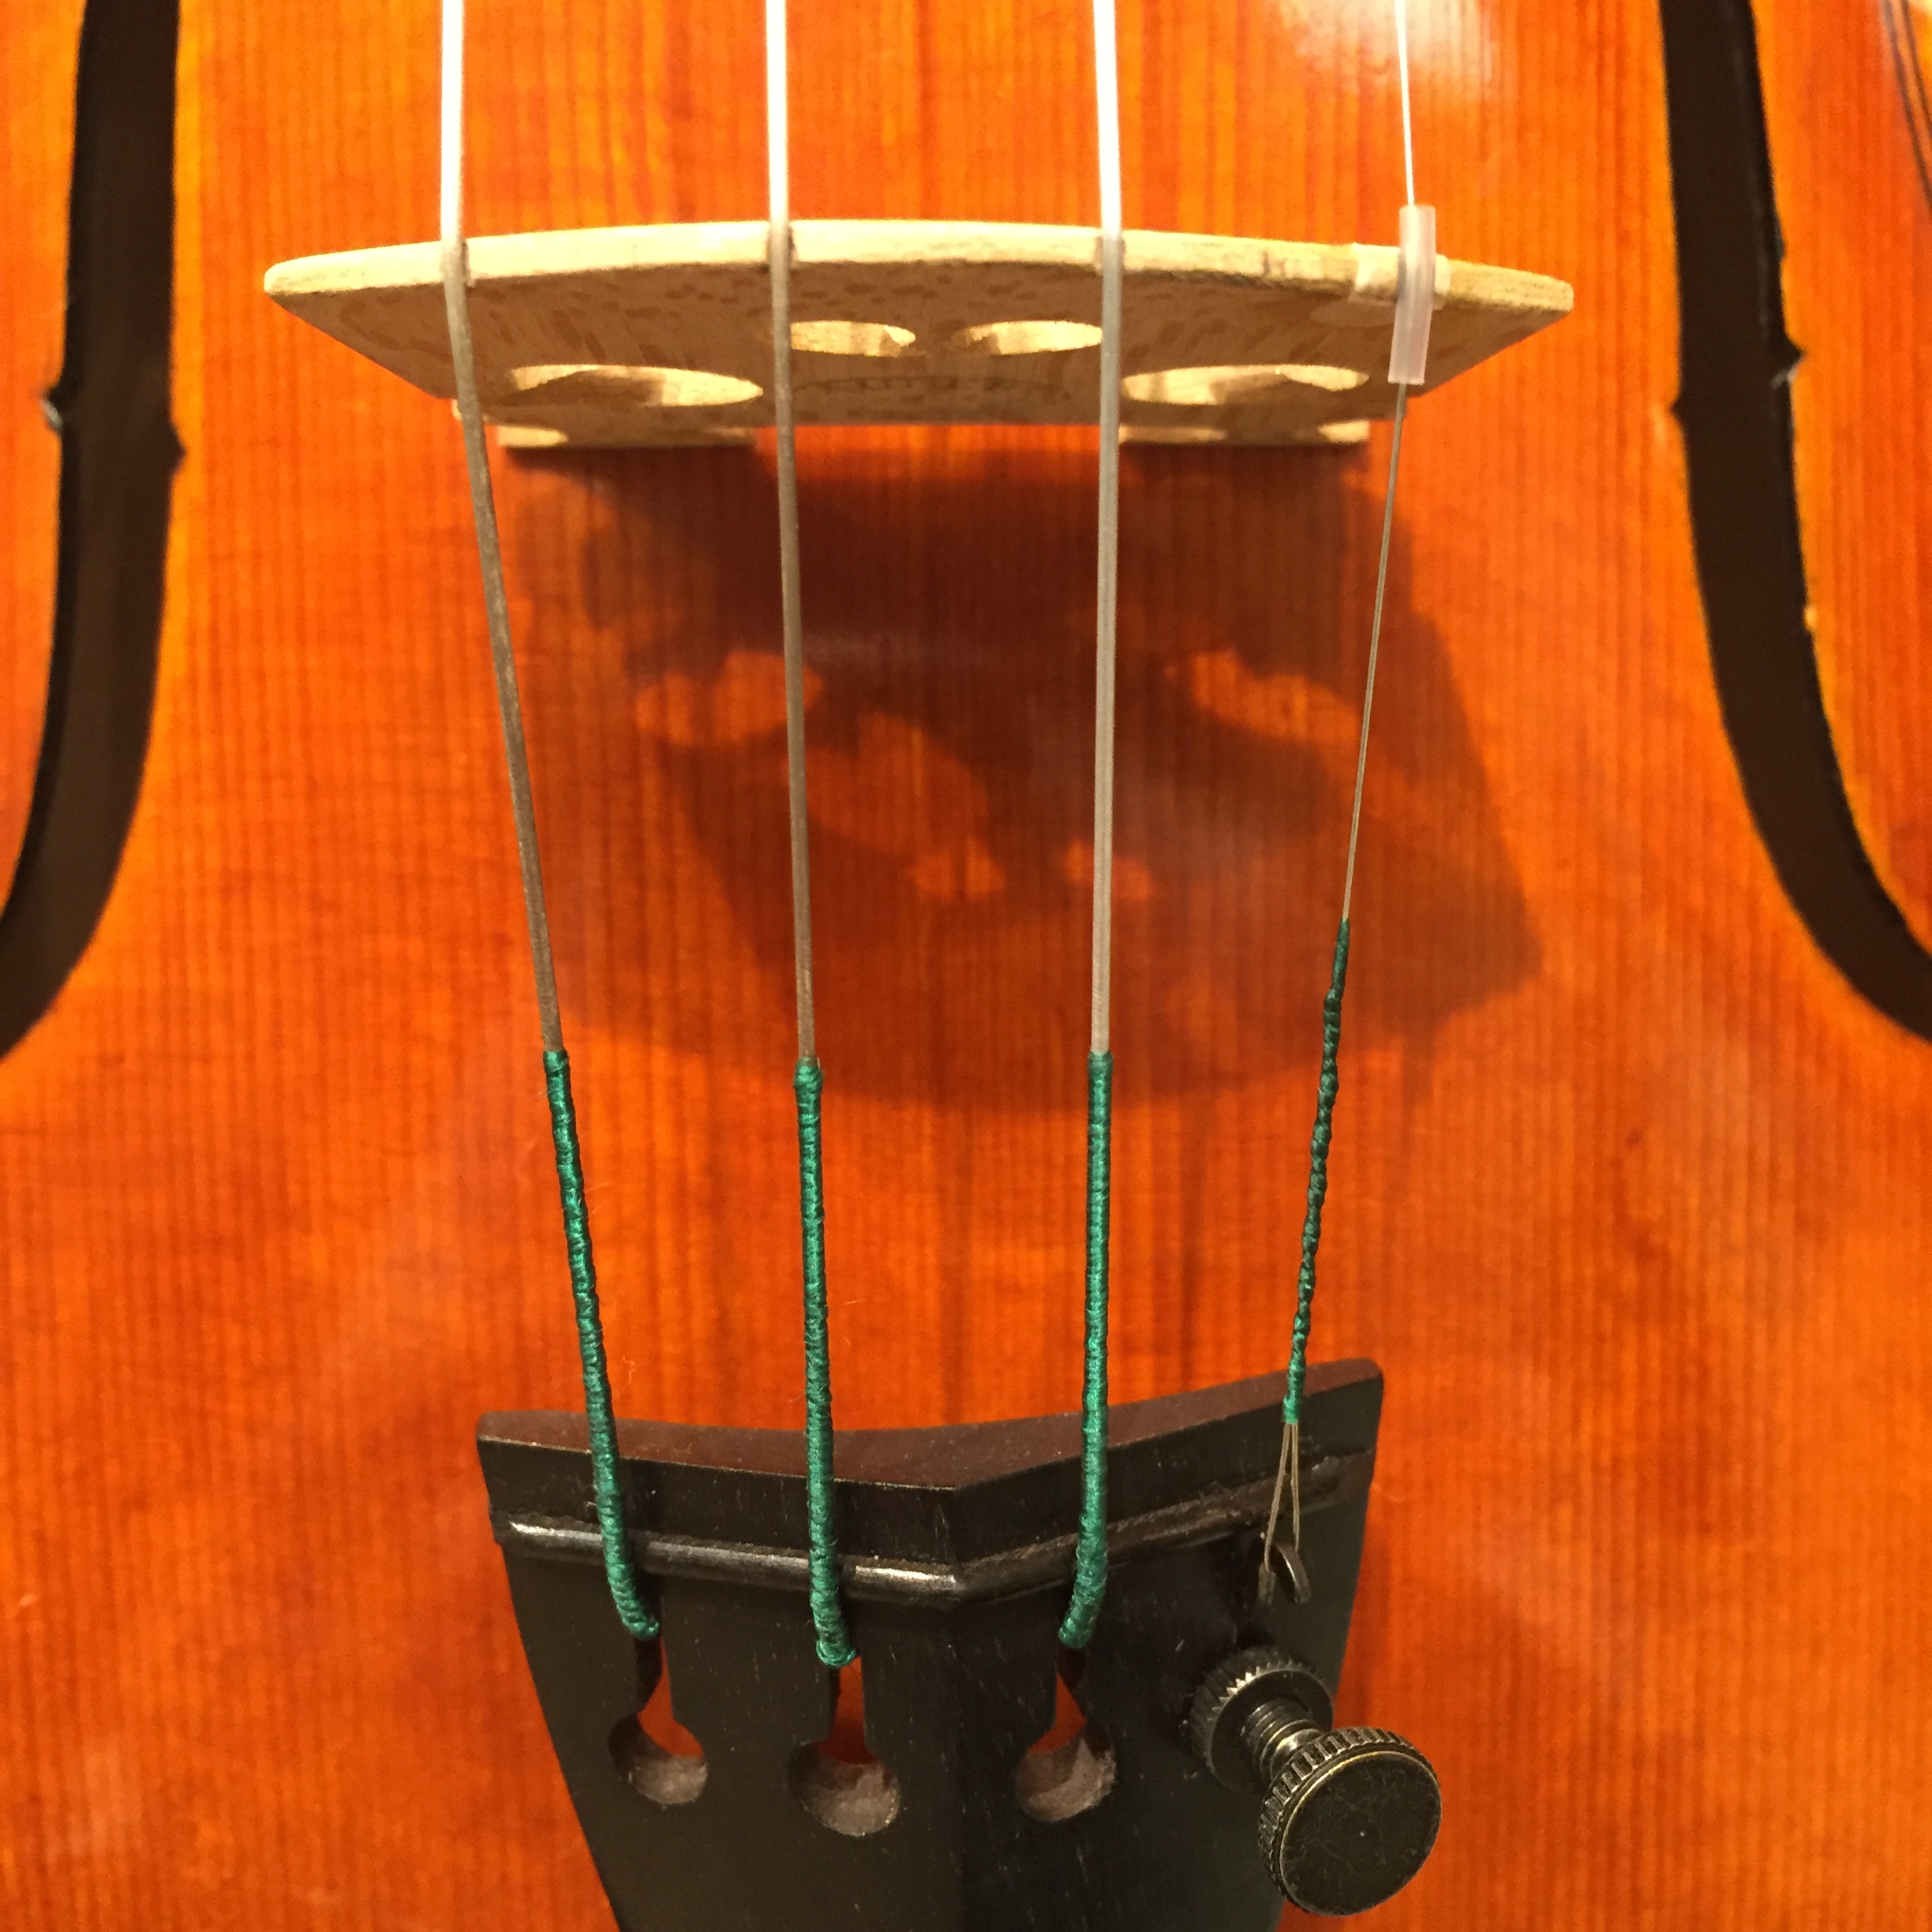 Violin String Identification Chart